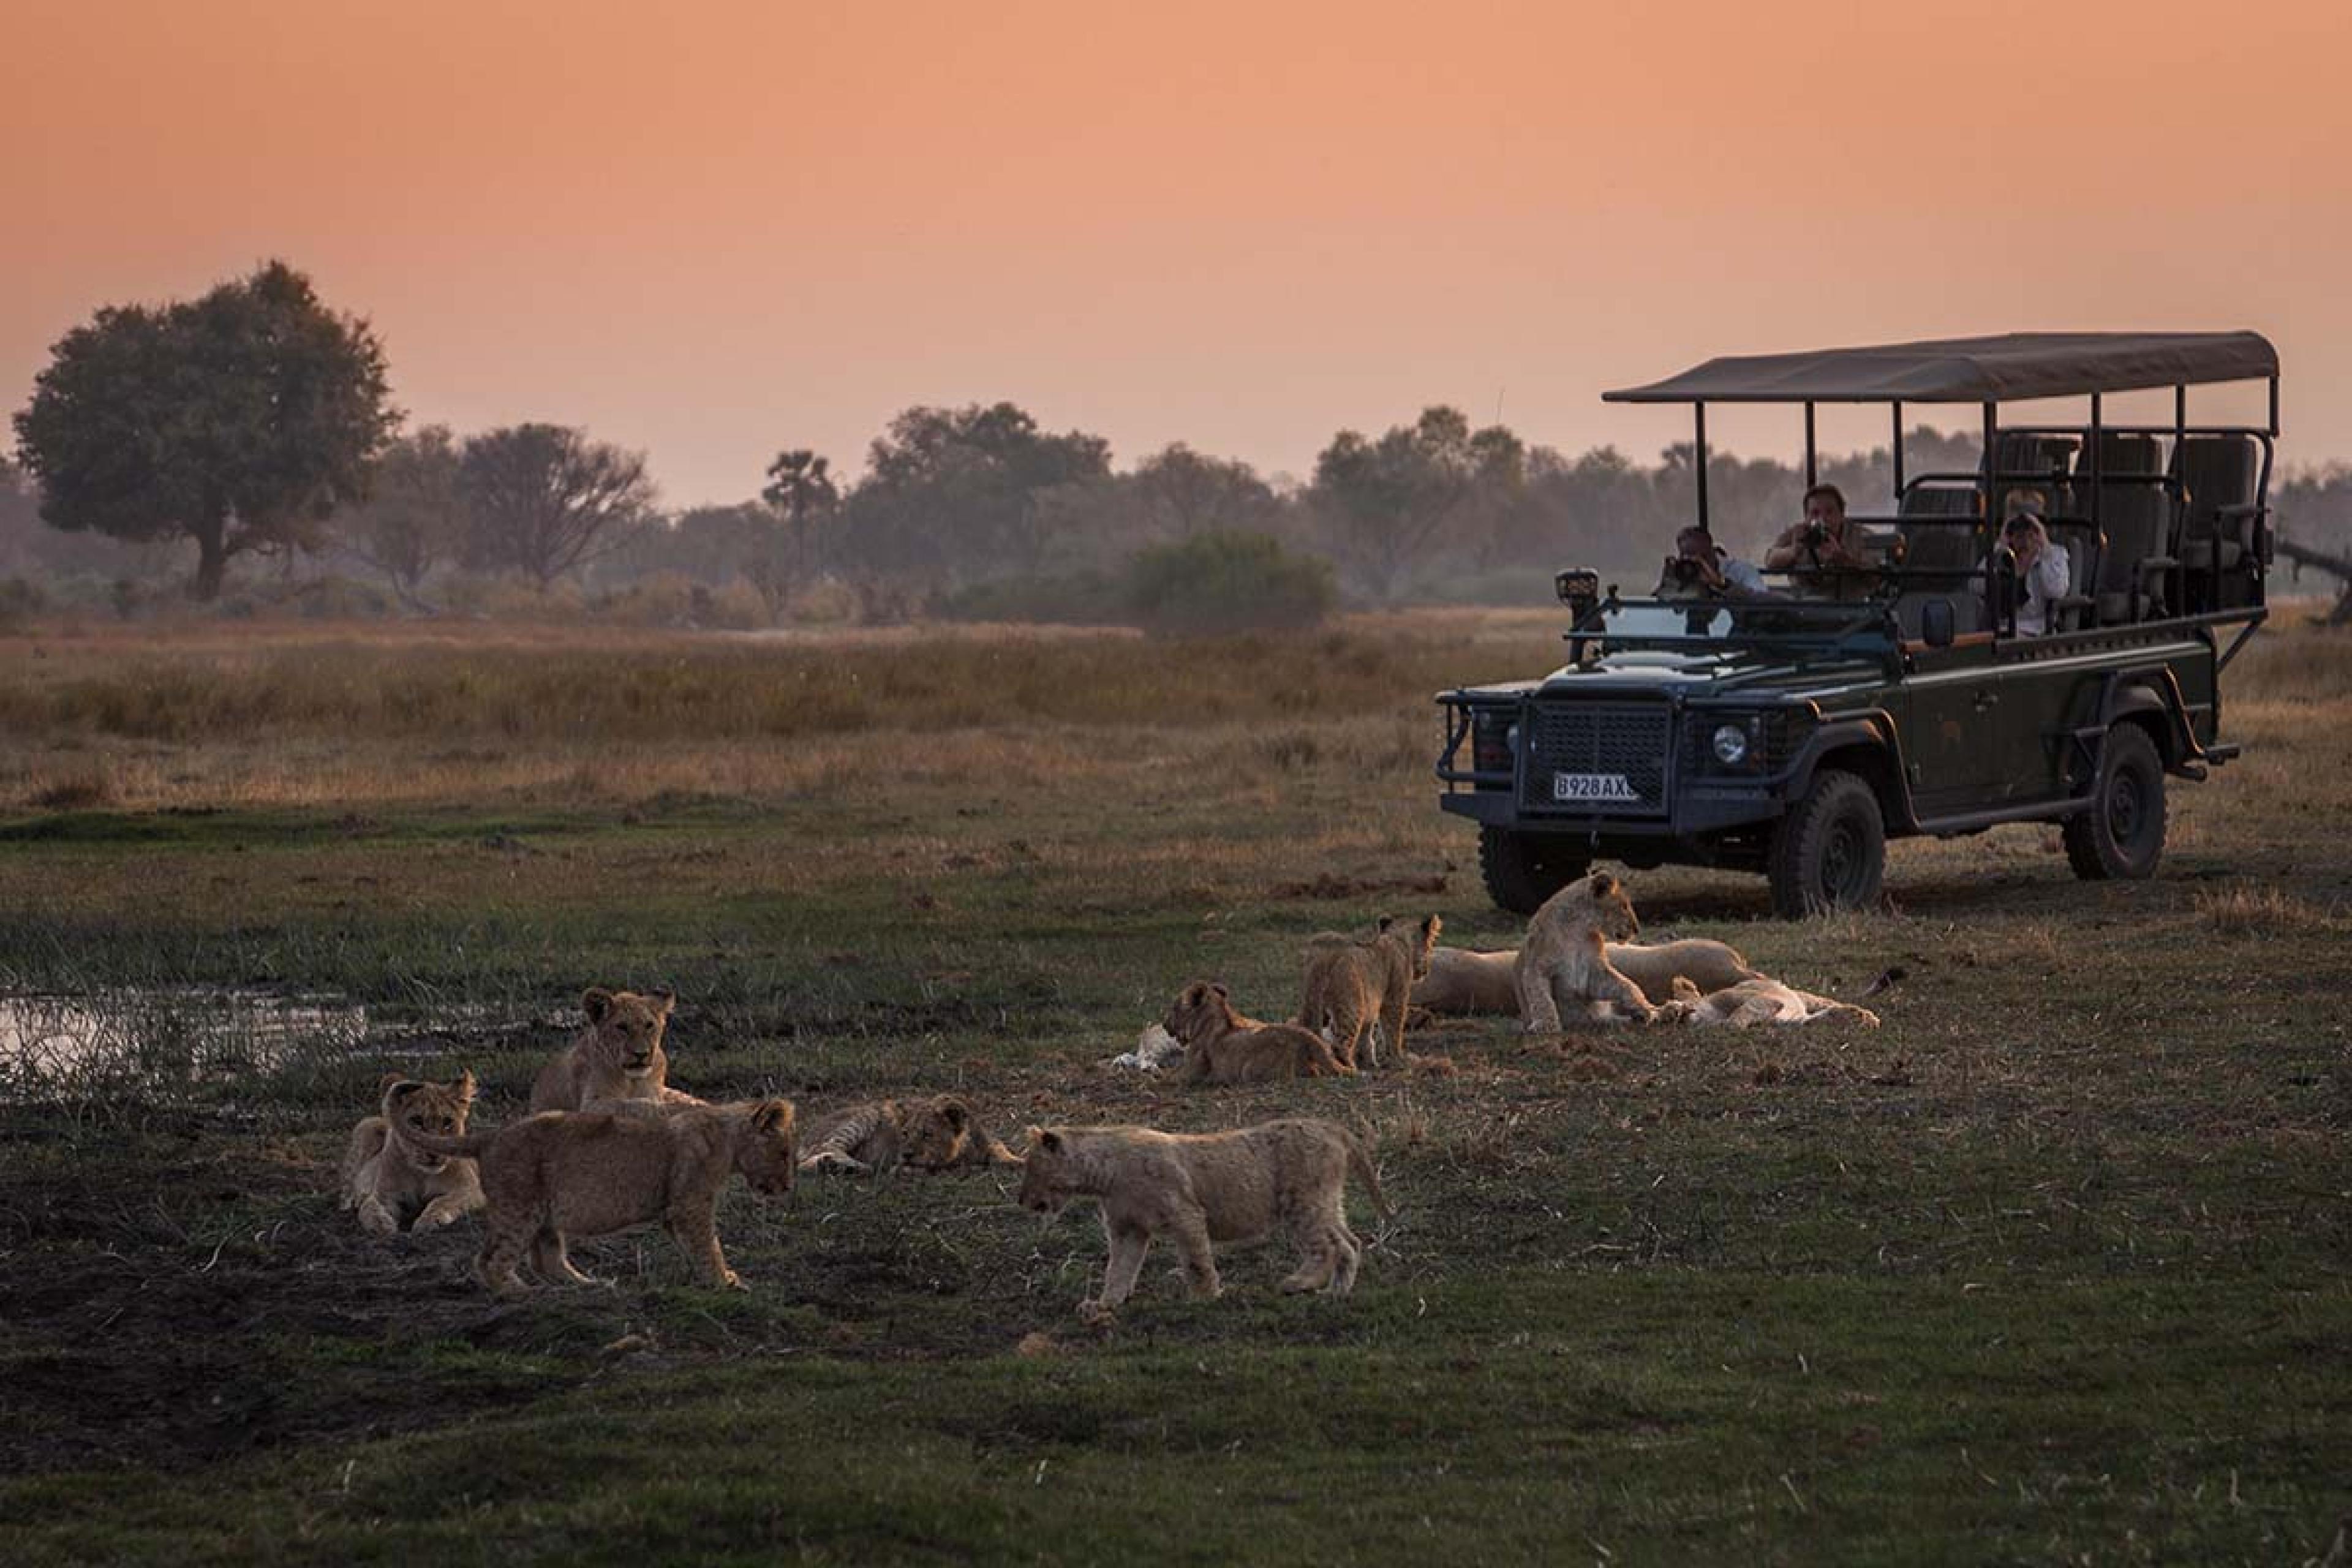 safari jeep at sunset